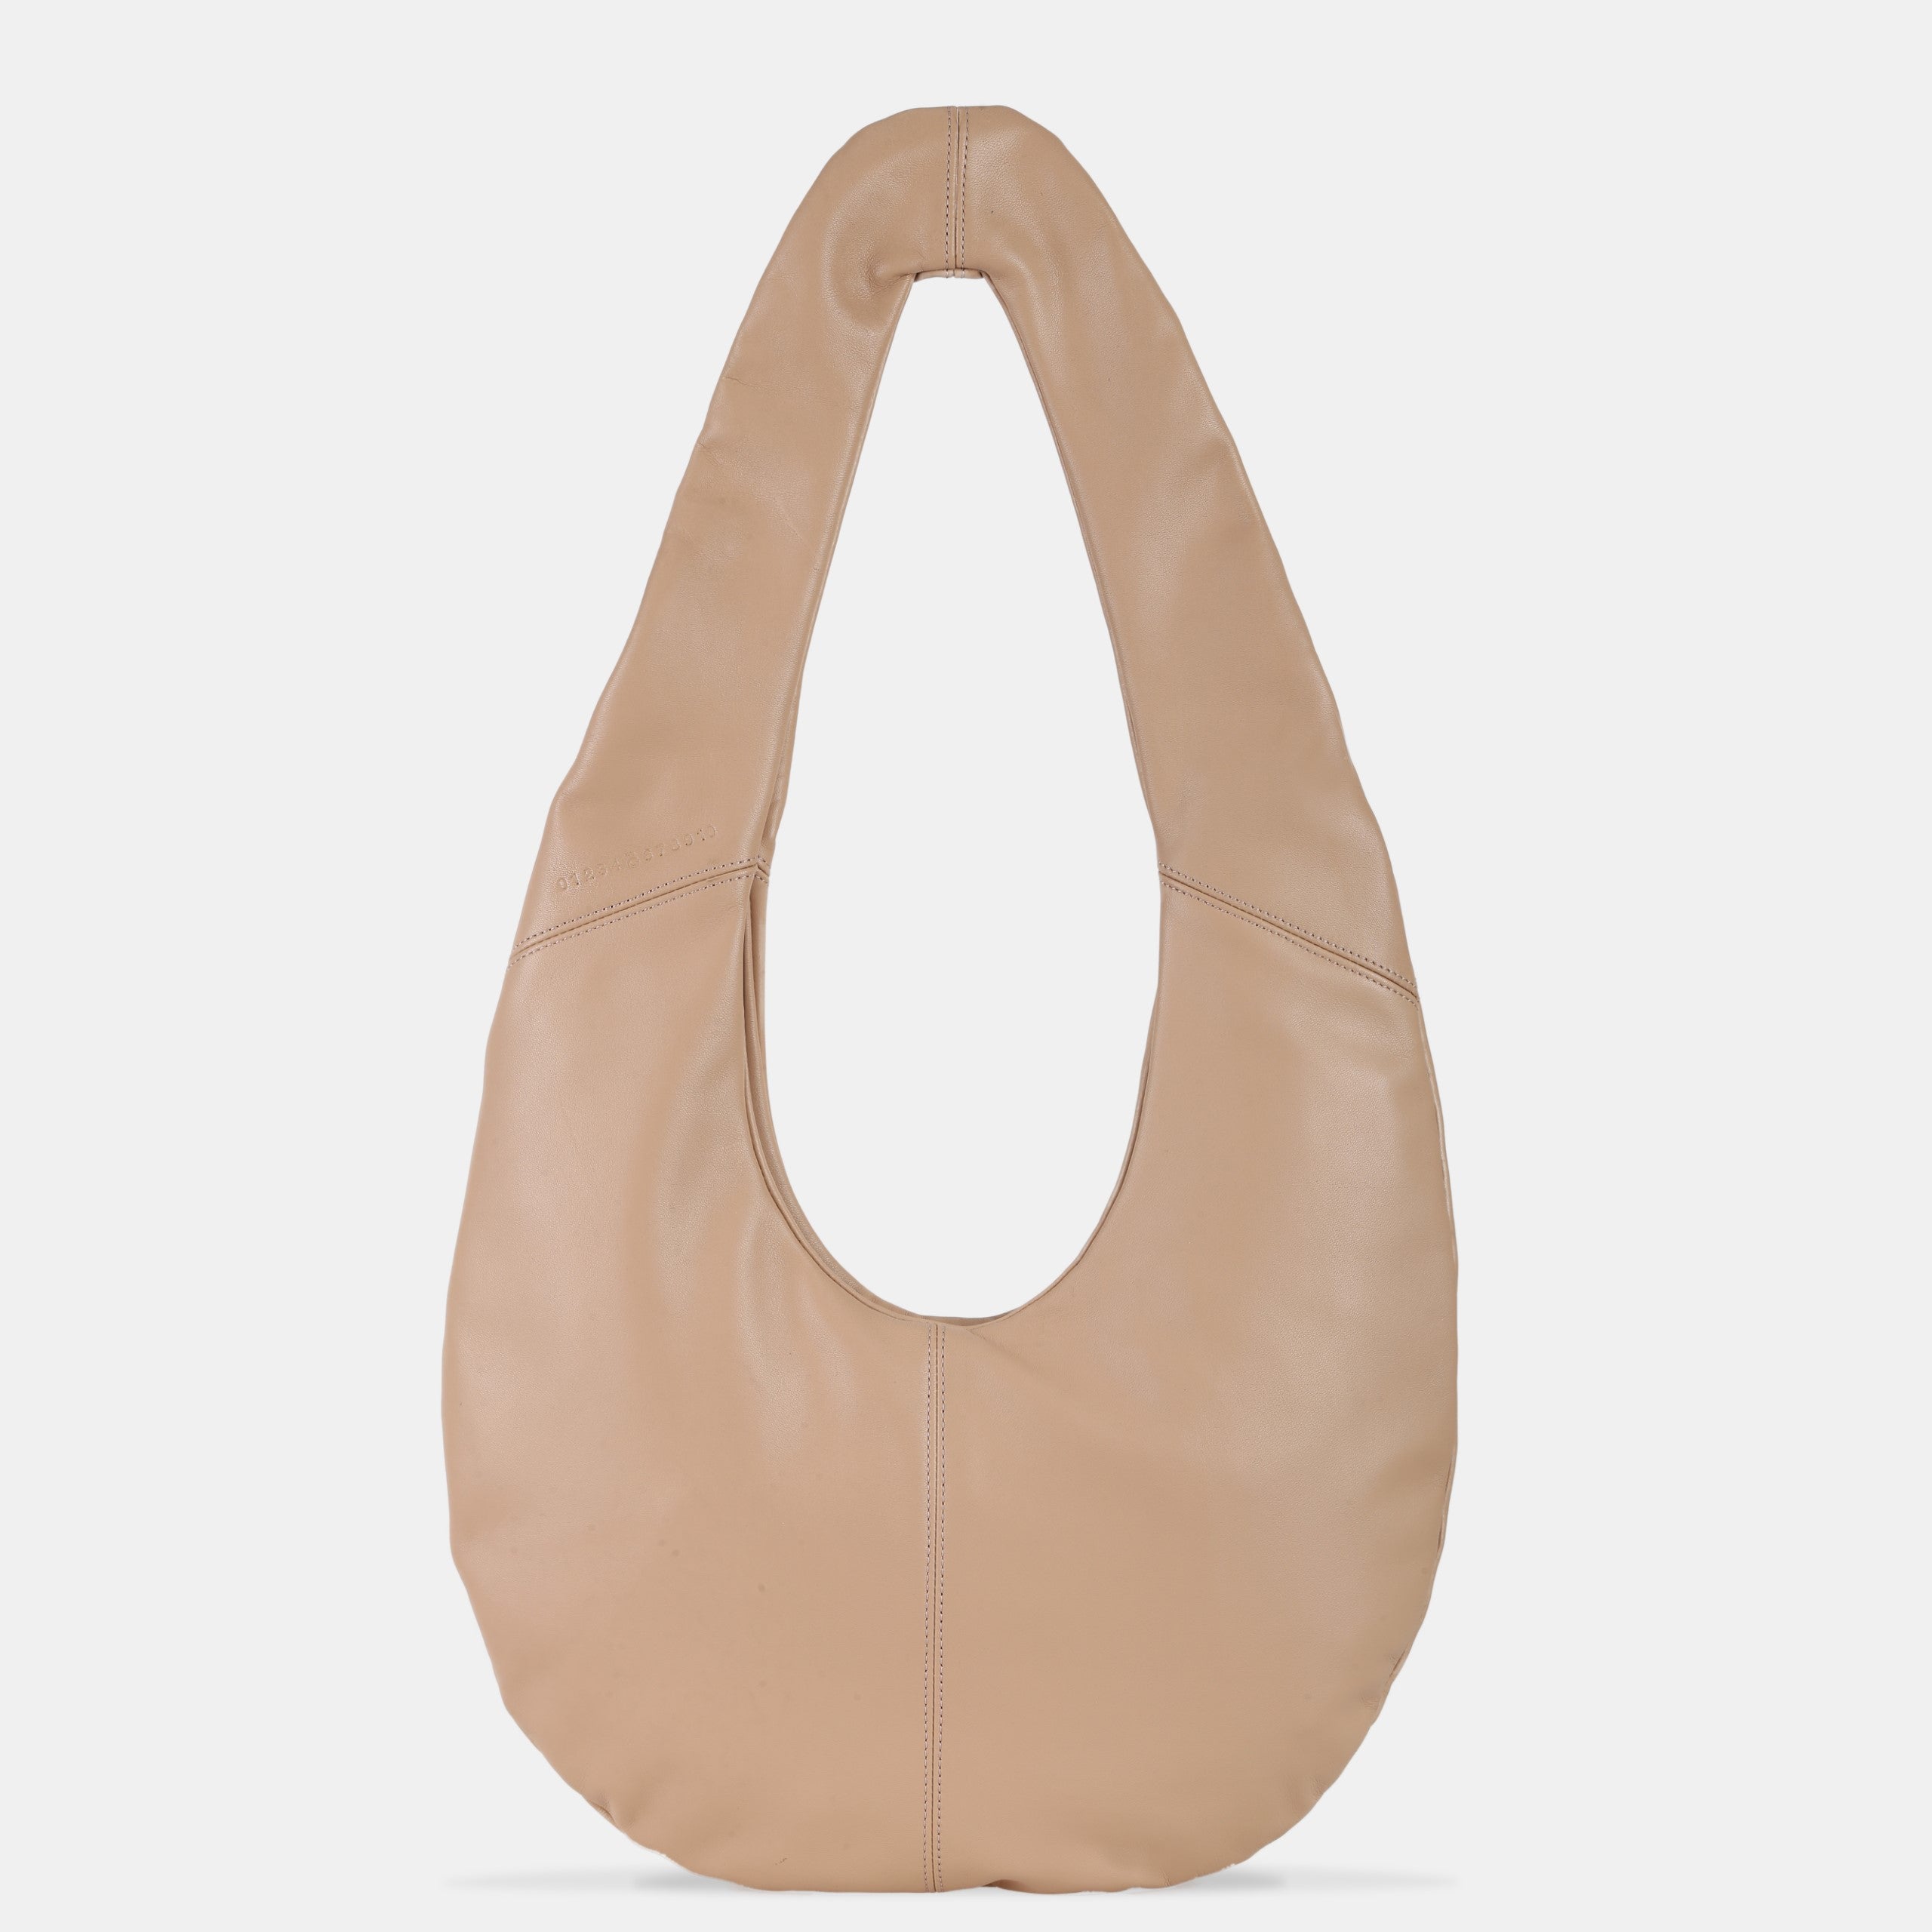 Cream RAINDROP handbag (real leather)